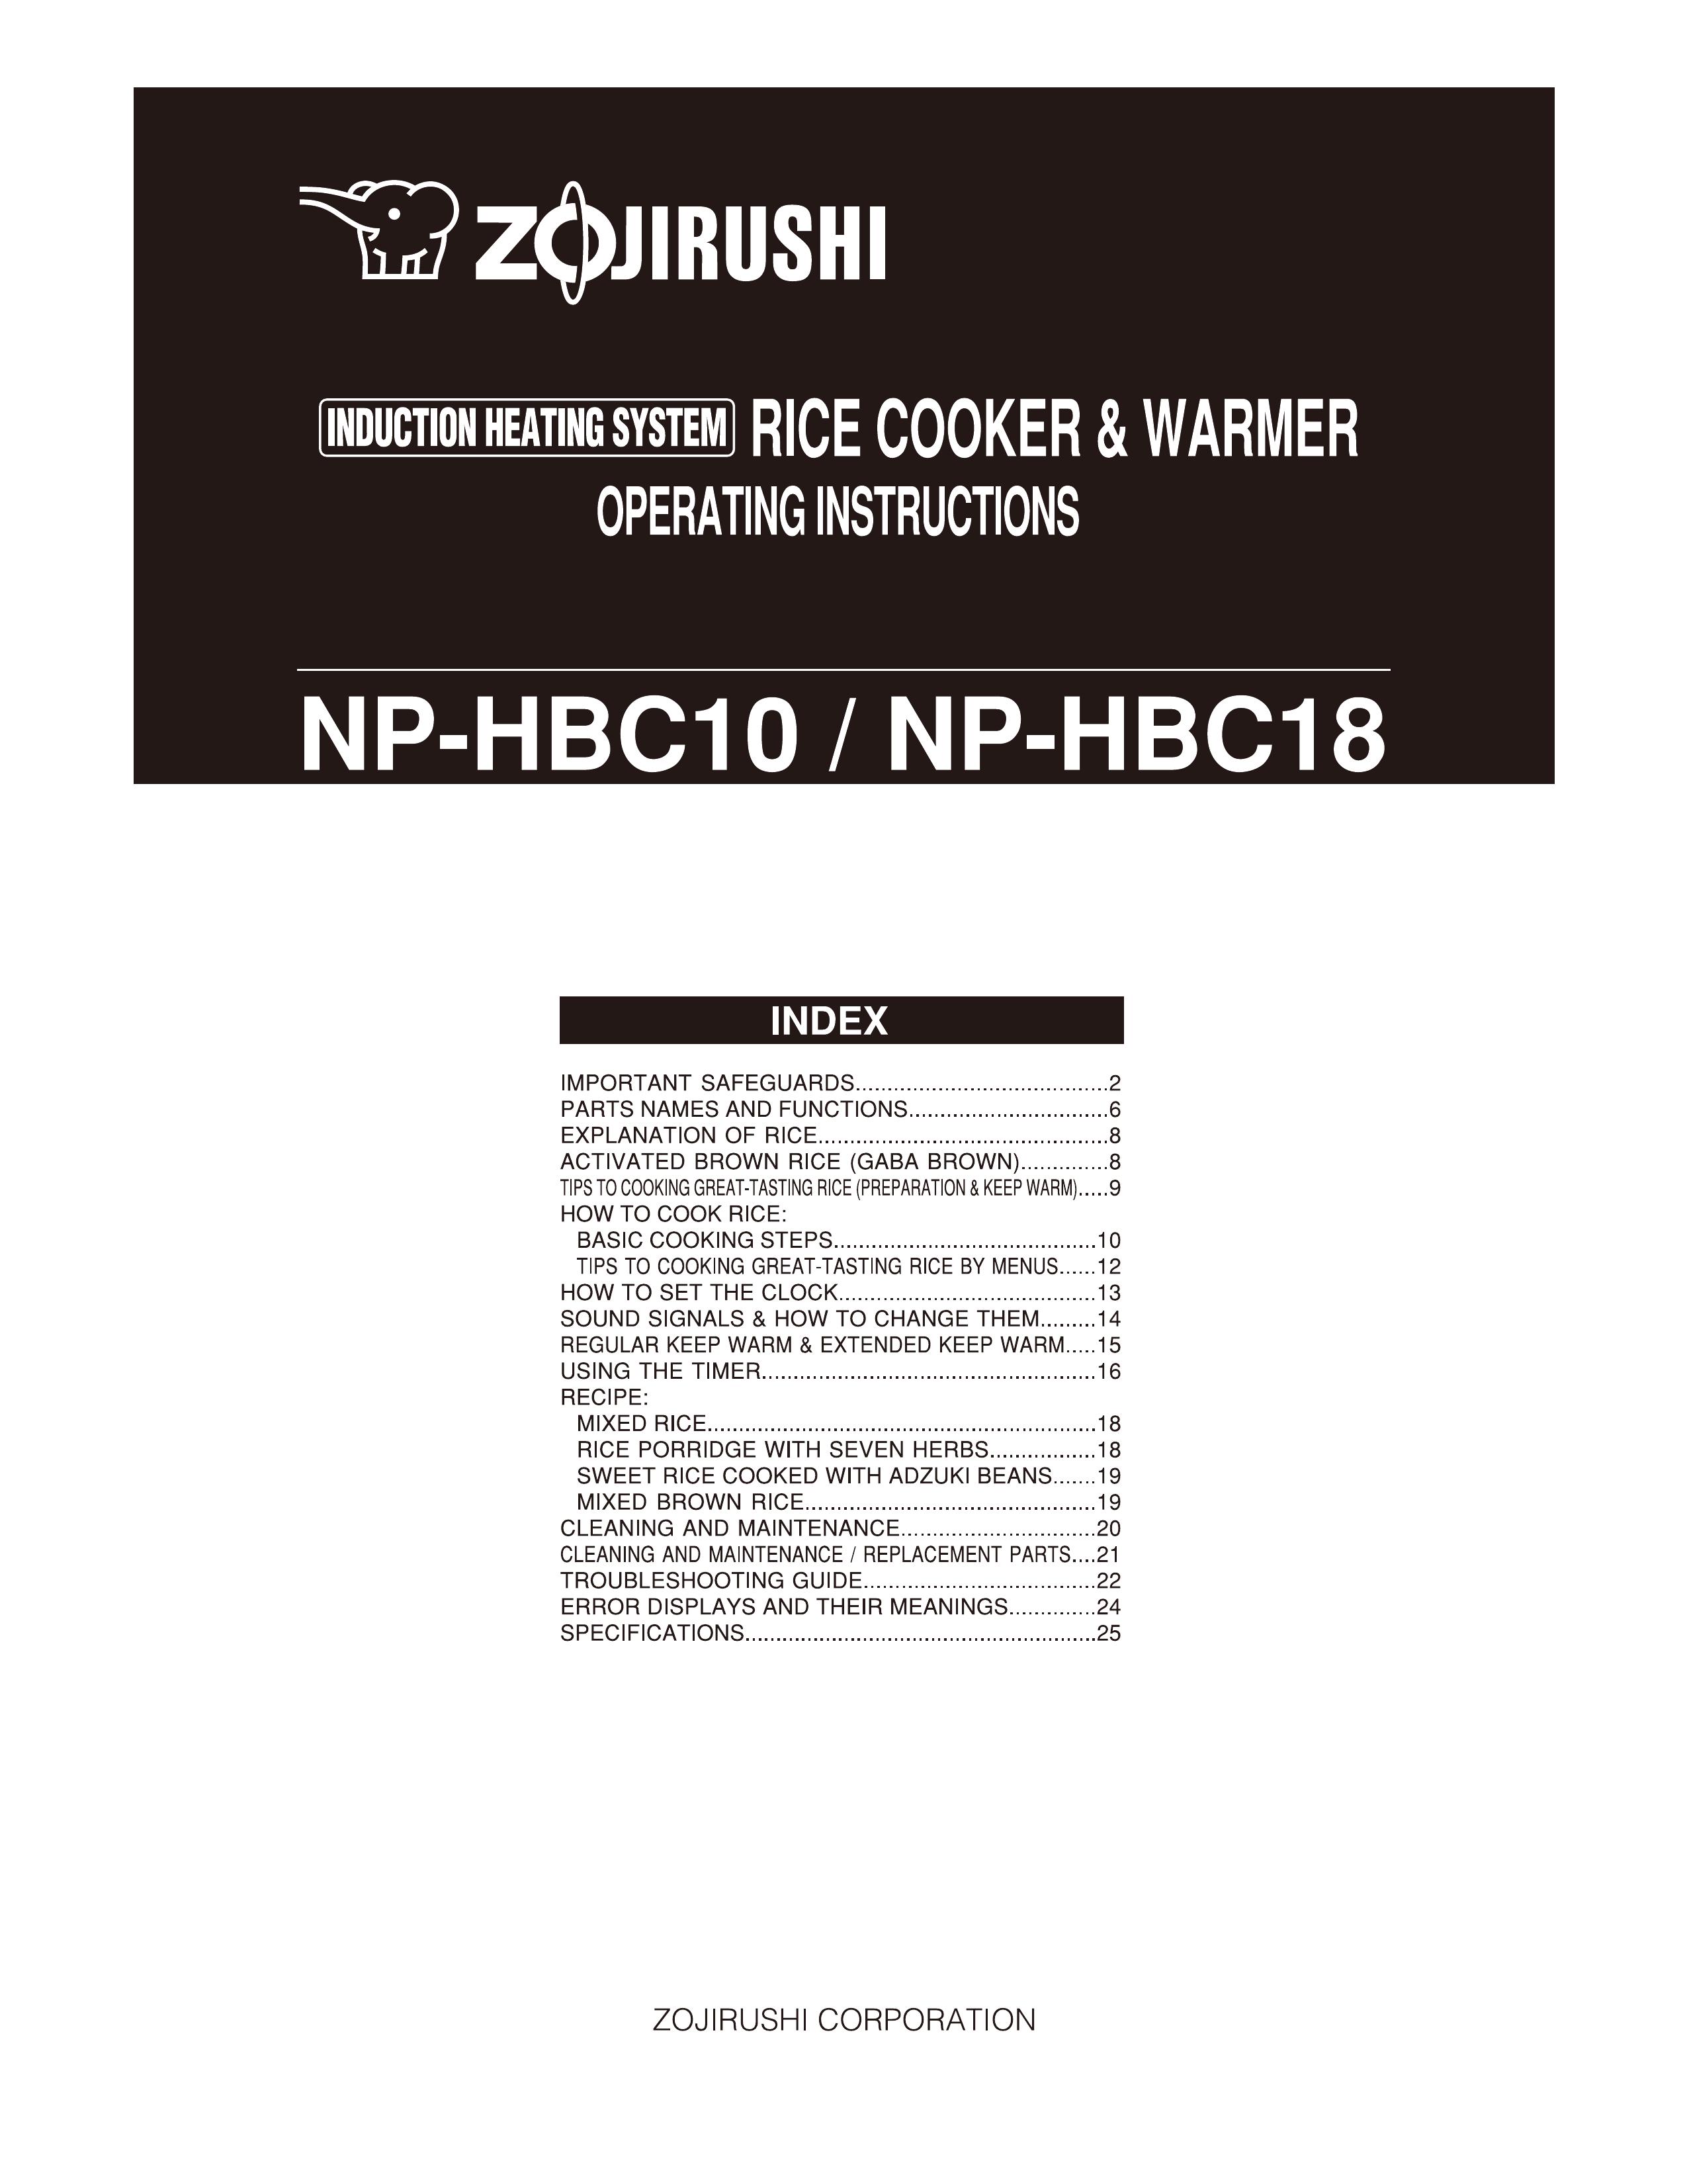 Zojirushi NP-HBC10 Rice Cooker User Manual